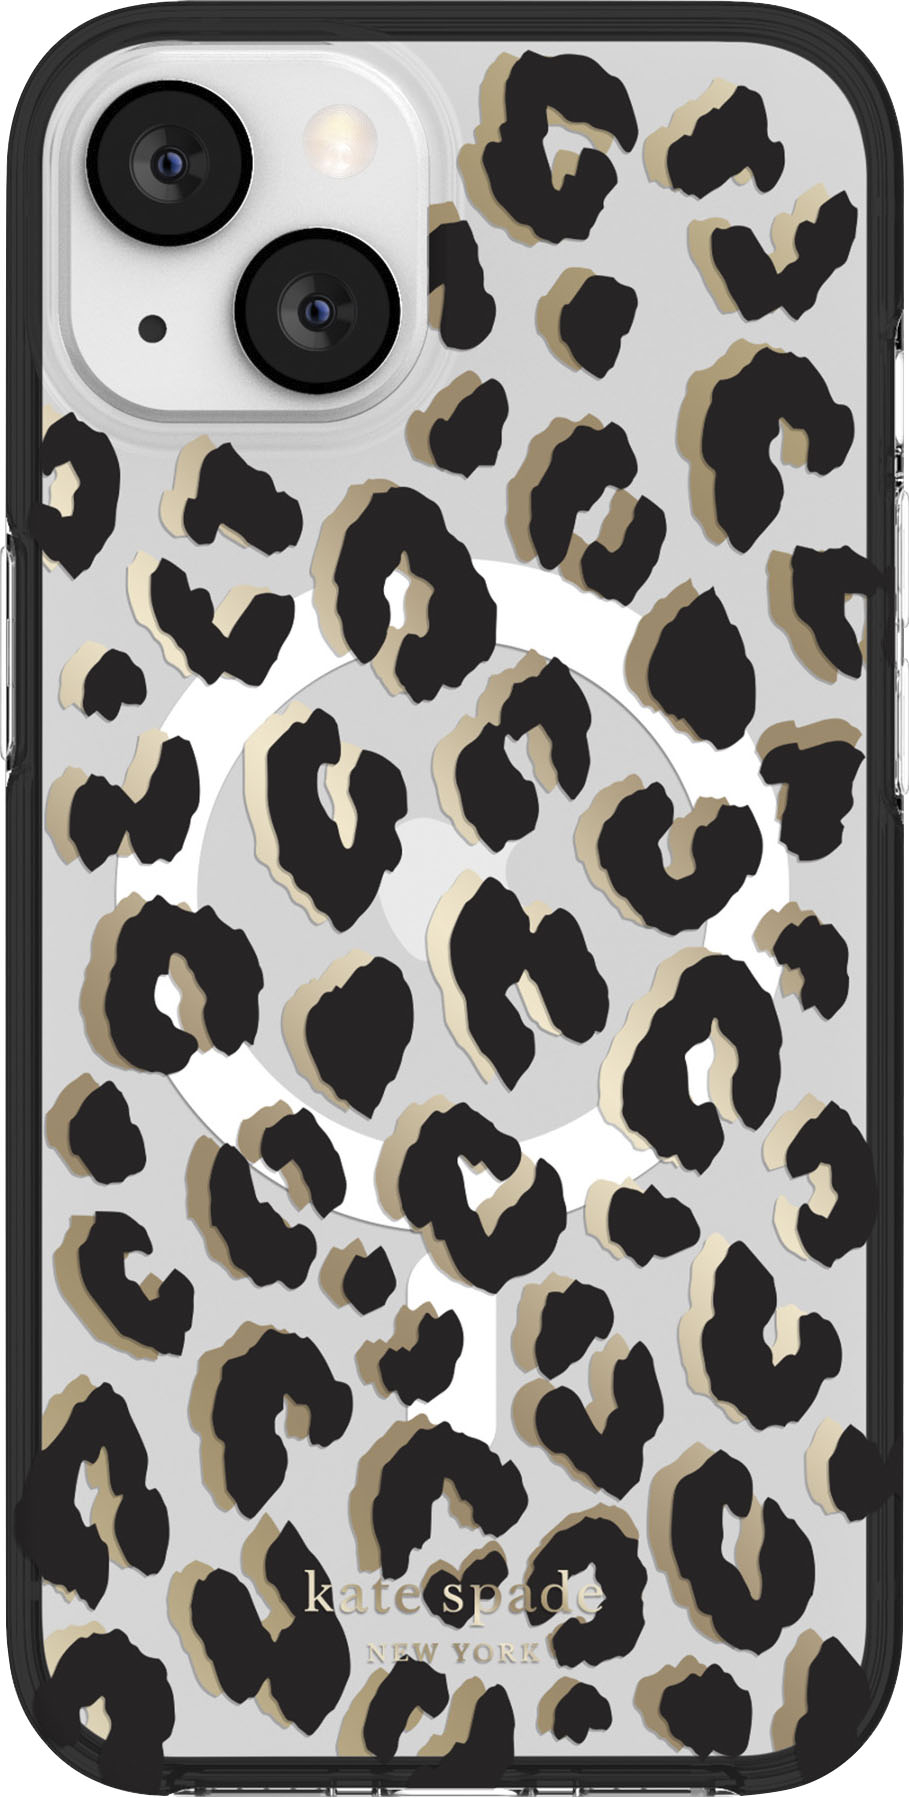 Arriba 96+ imagen kate spade leopard print iphone case